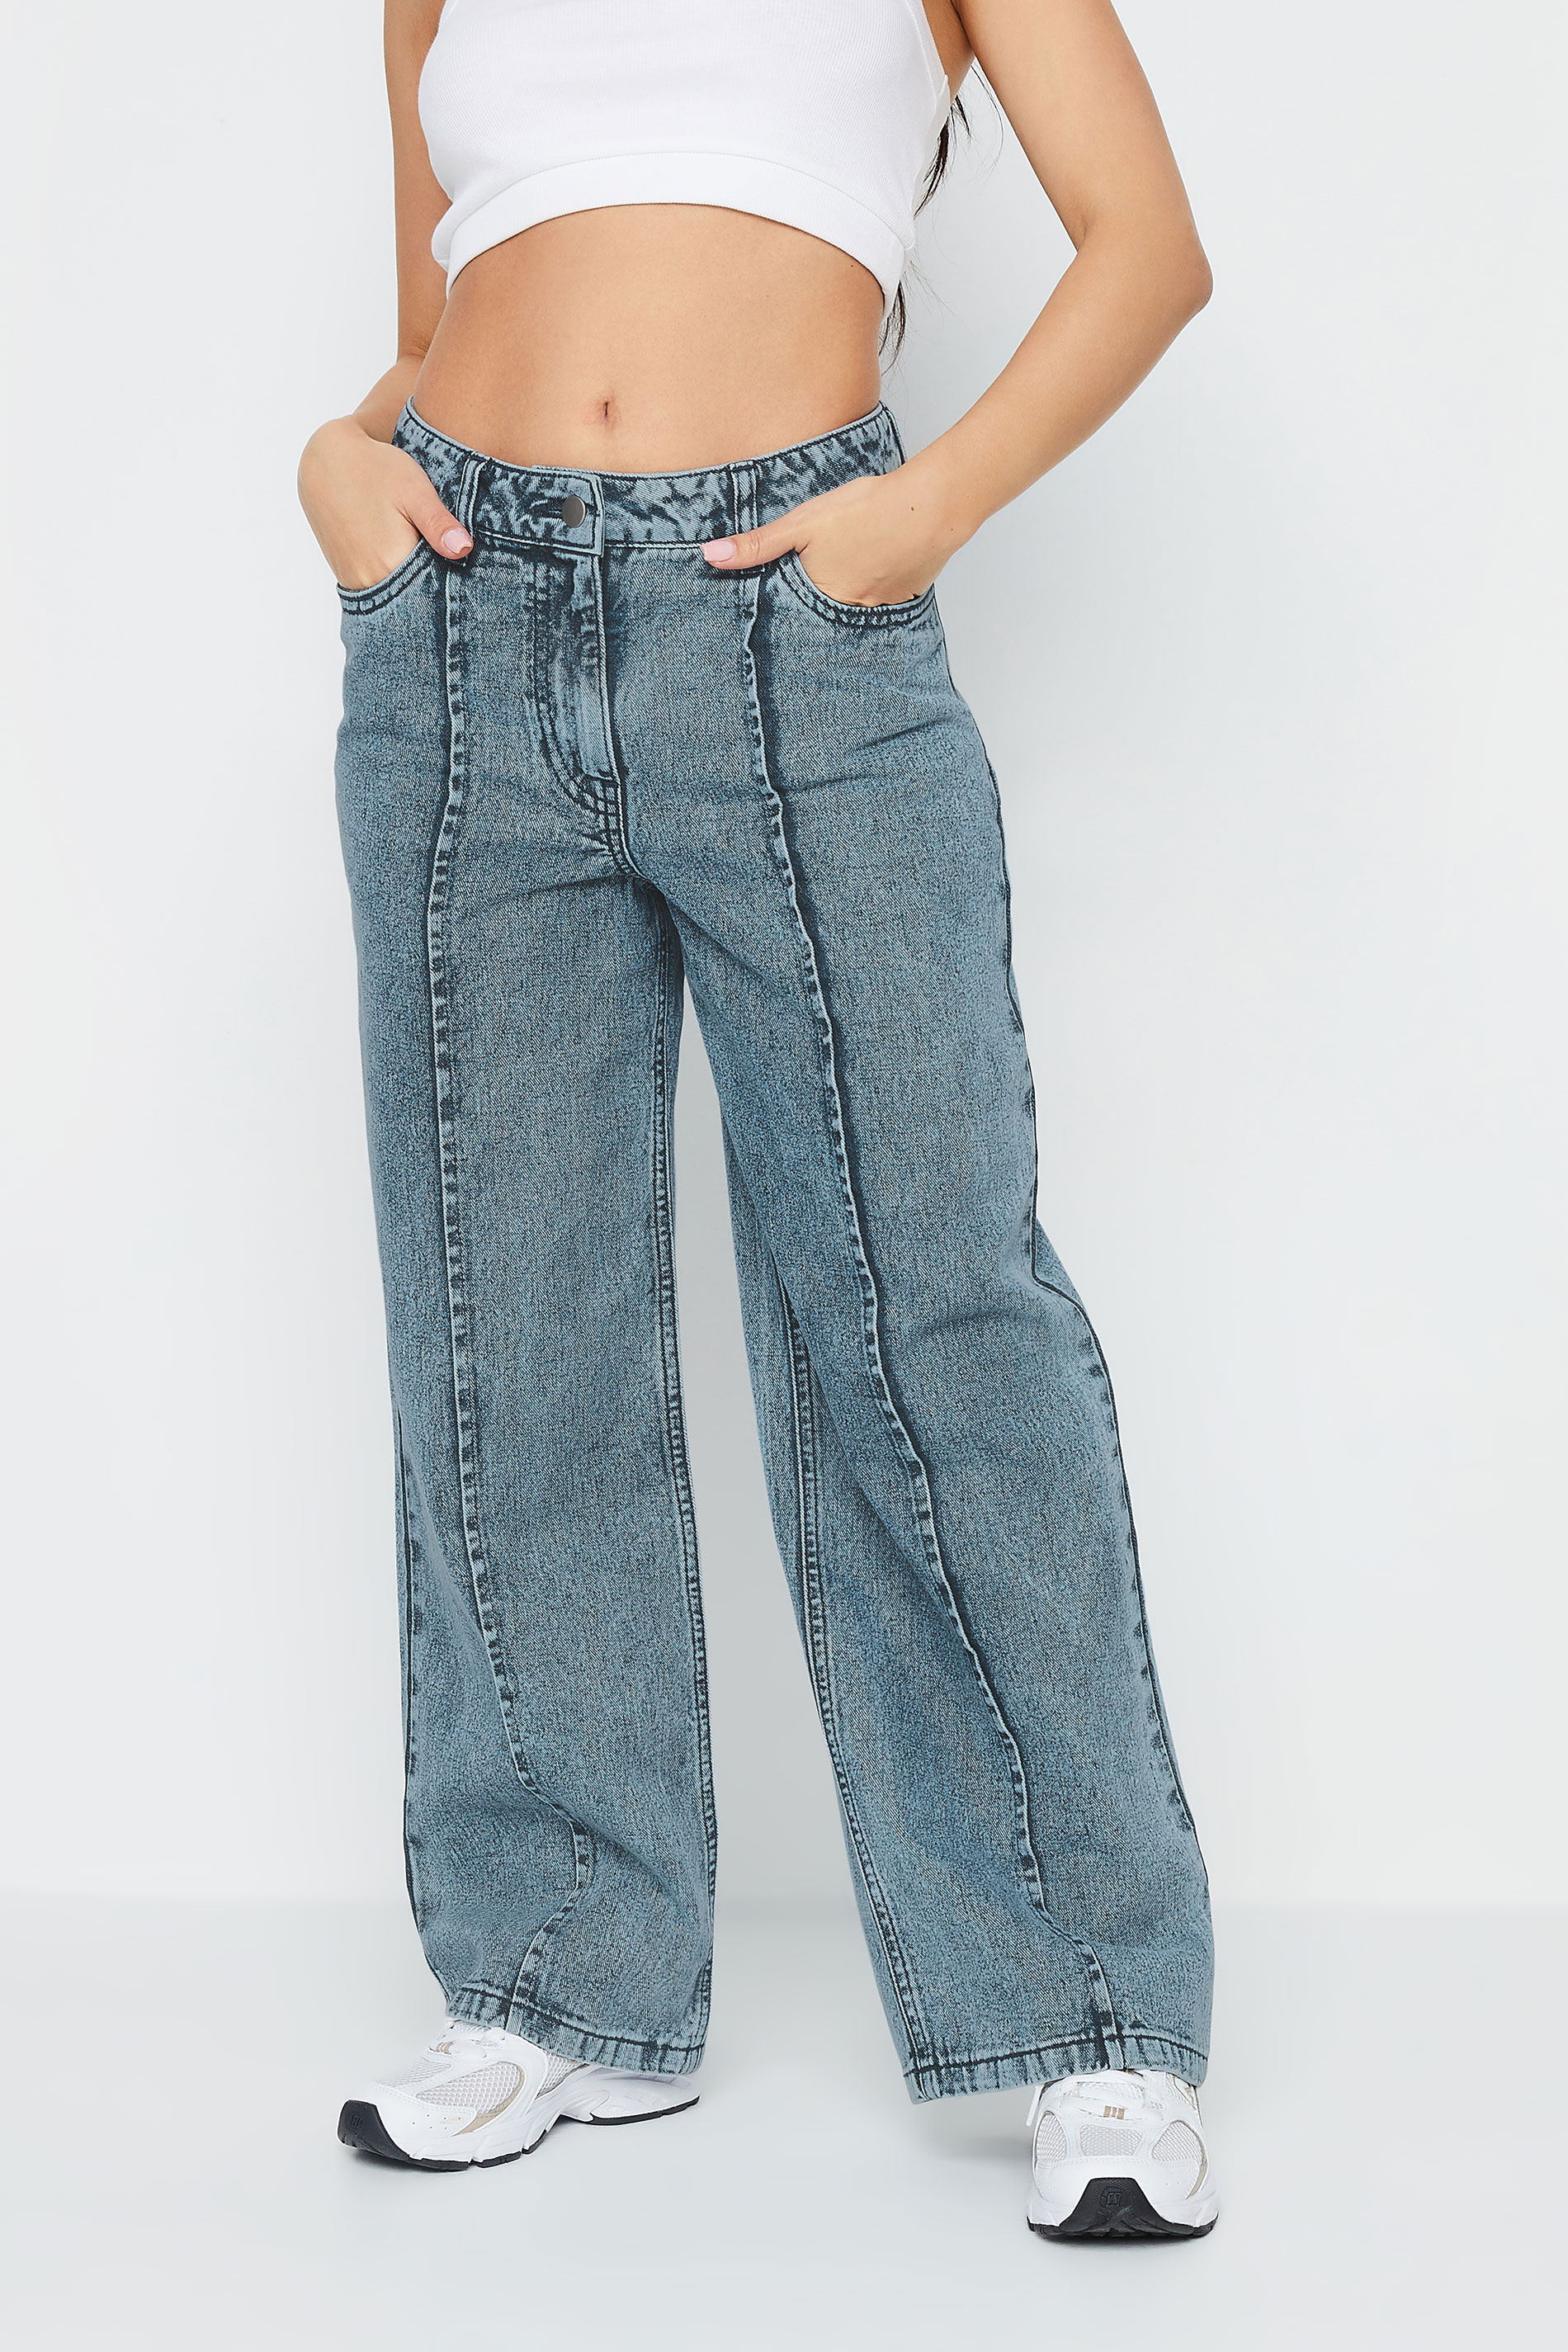 PixieGirl Petite Women's Blue Seam Front Wide Leg Jeans | PixieGirl 2